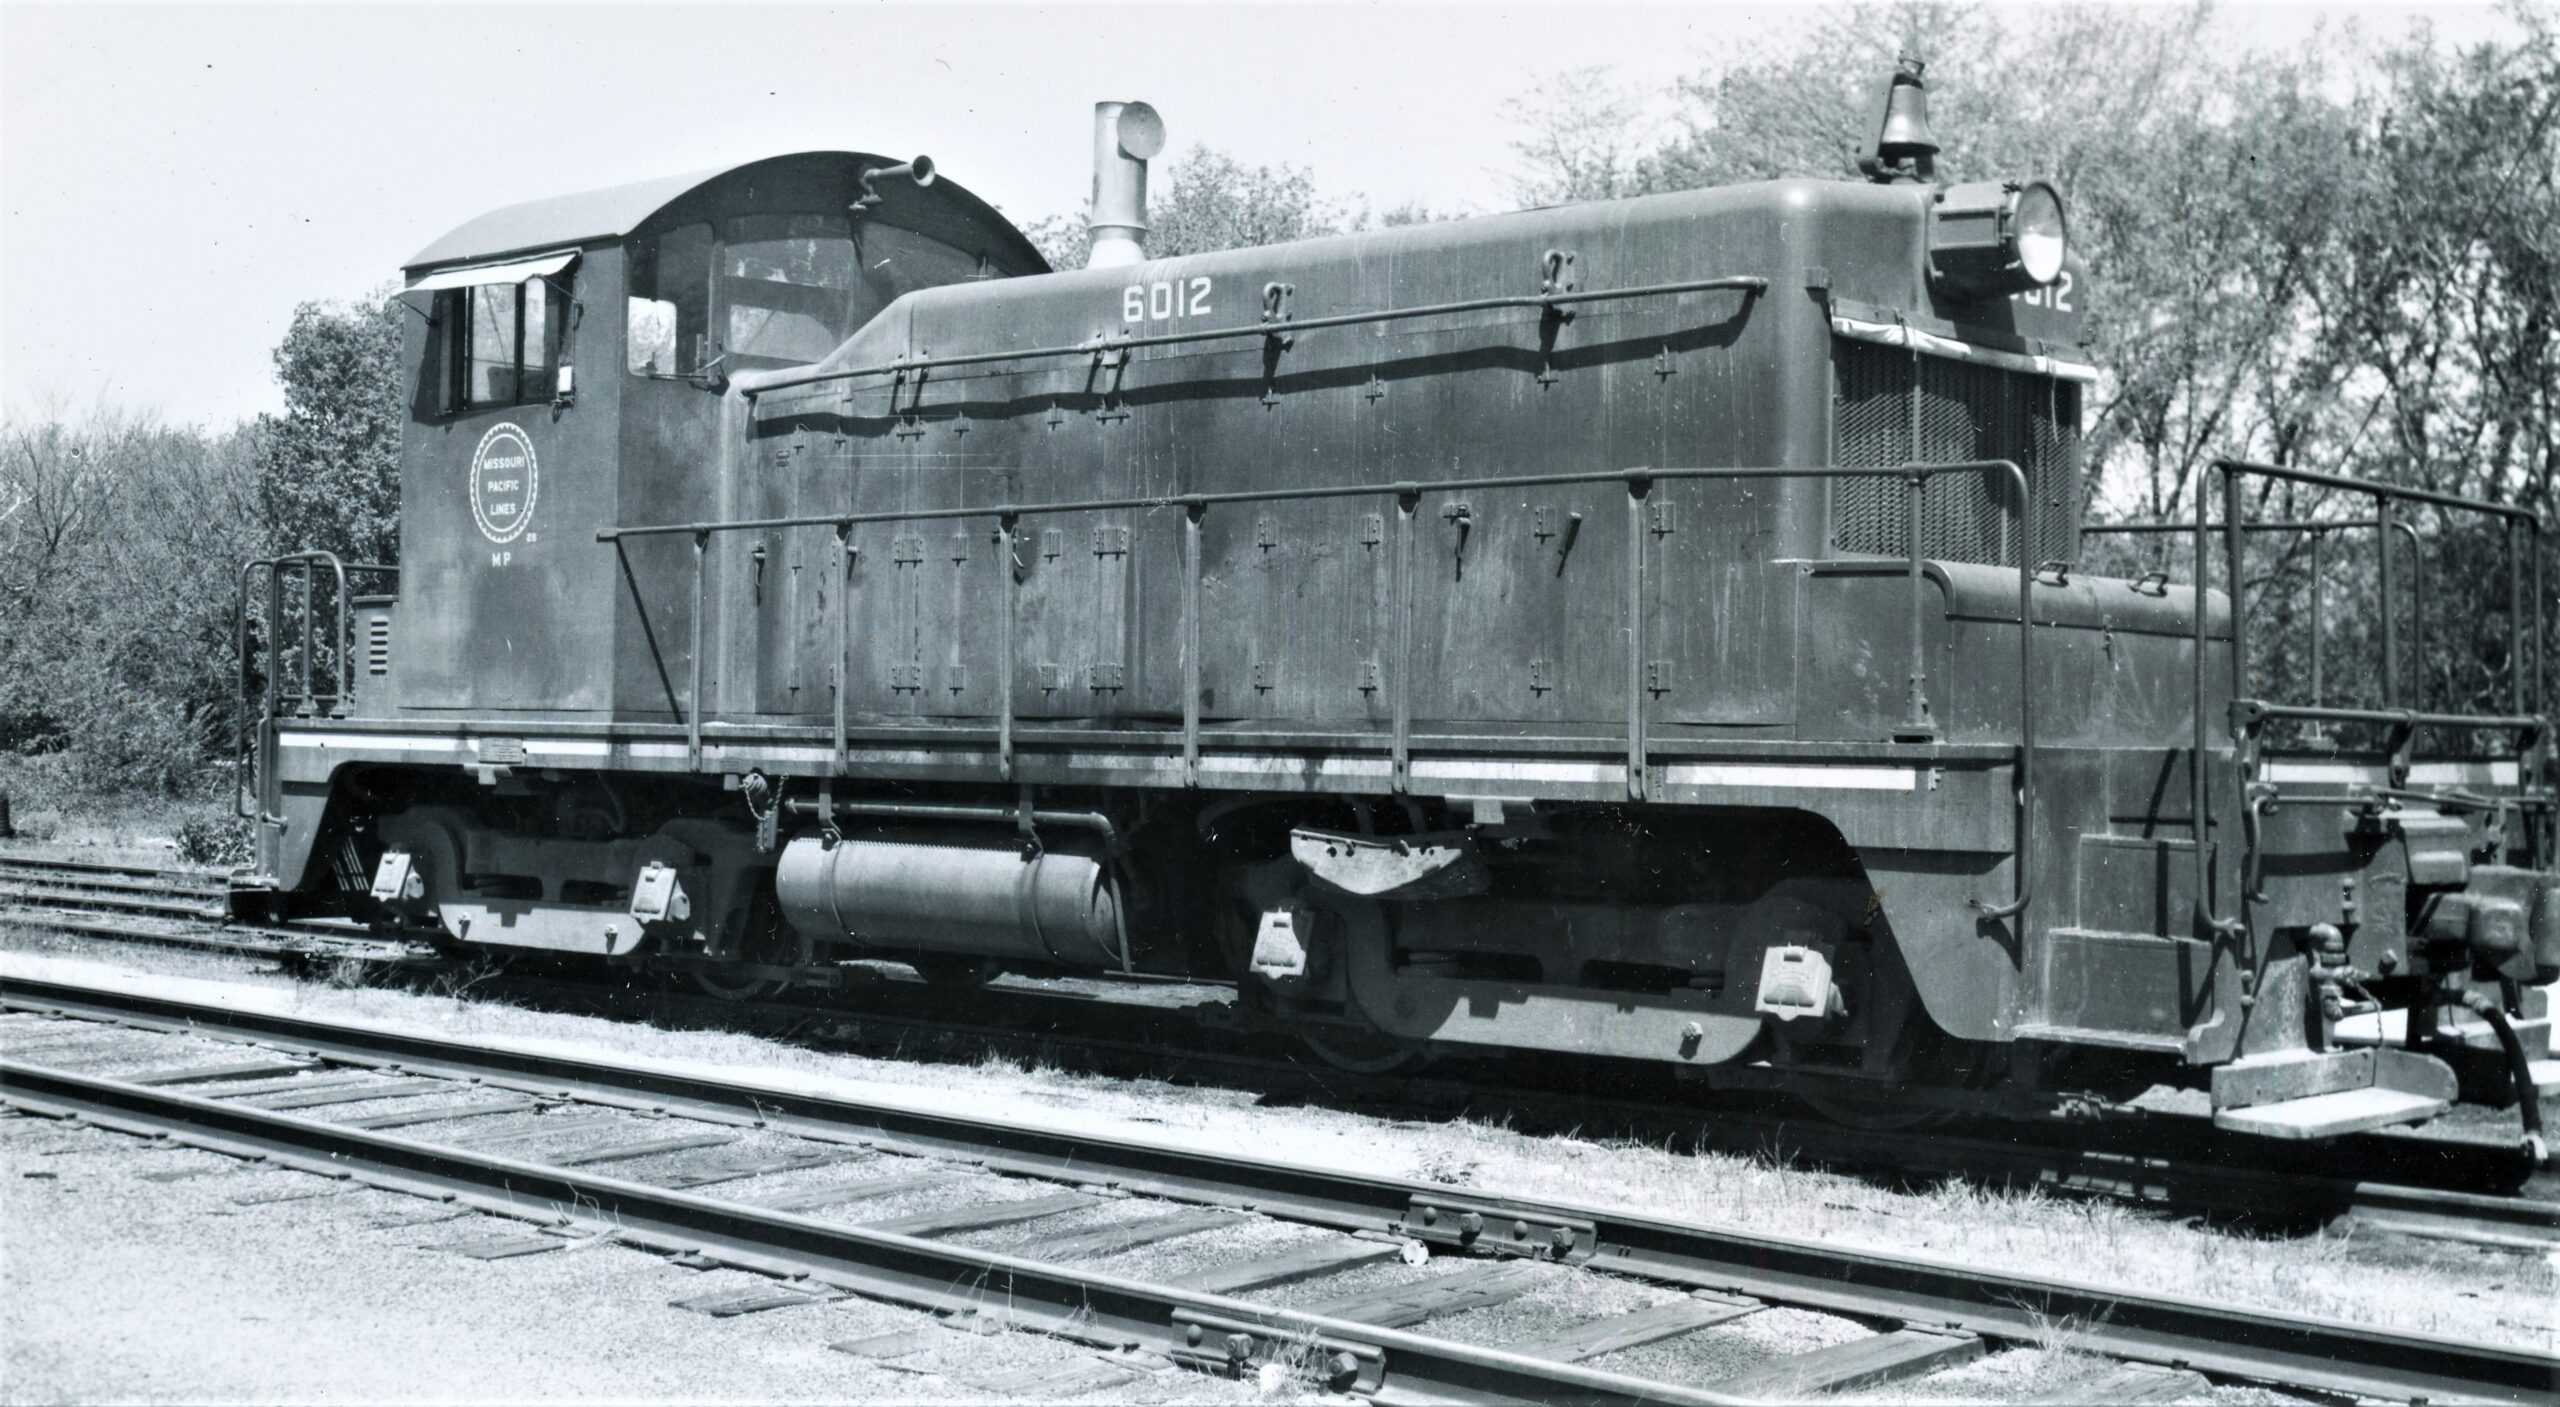 Missouri Pacific | Springfield, Missouri | EMD SW1 #6012 diesel-electric locomotive | May 2, 1965 | Arthur B. Johnson photograph | Elmer Kremkow collection